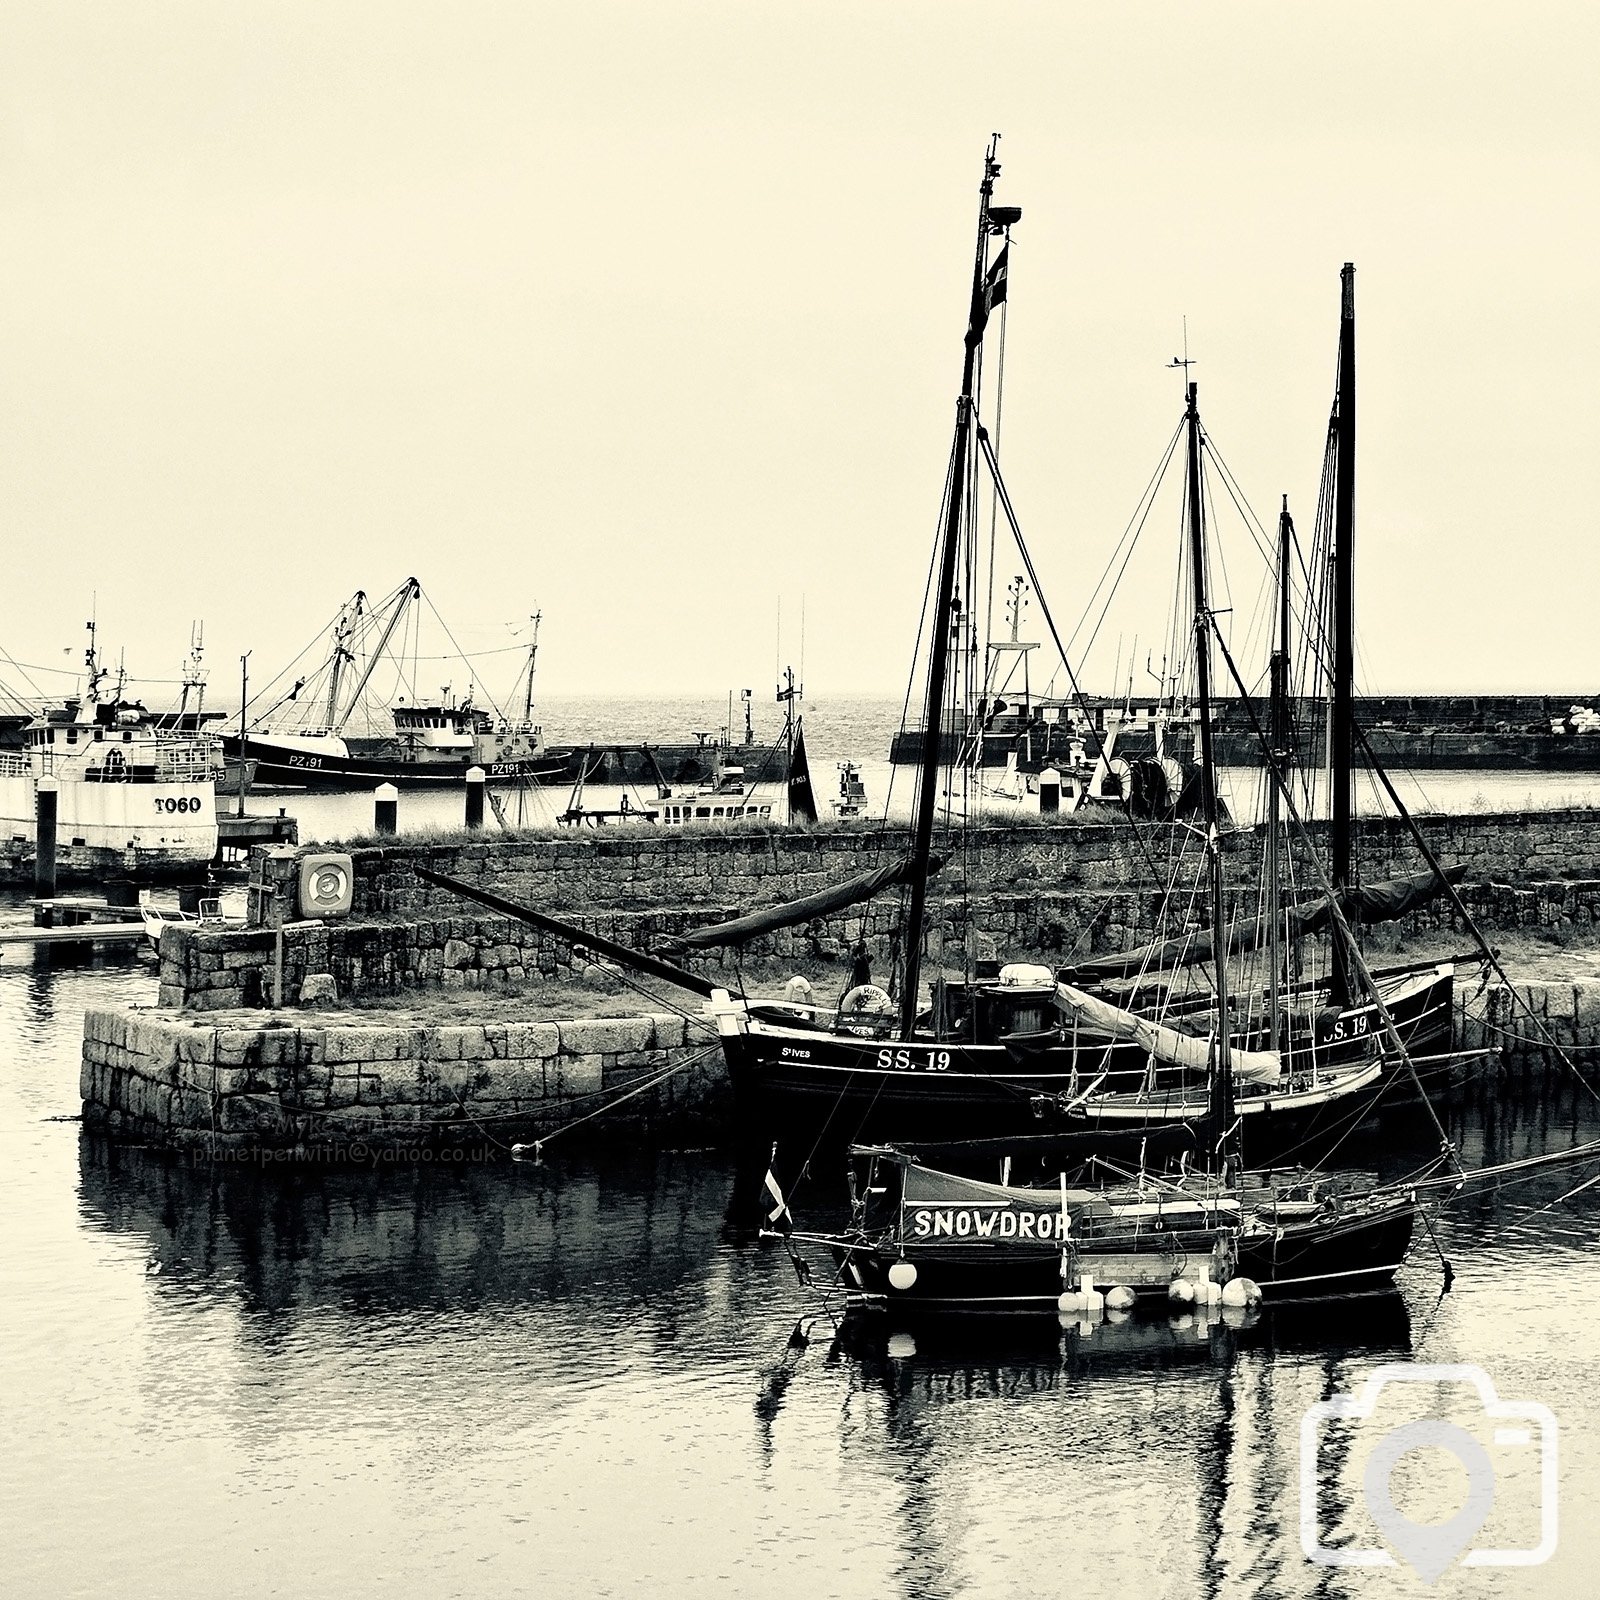 Old Harbour Scene